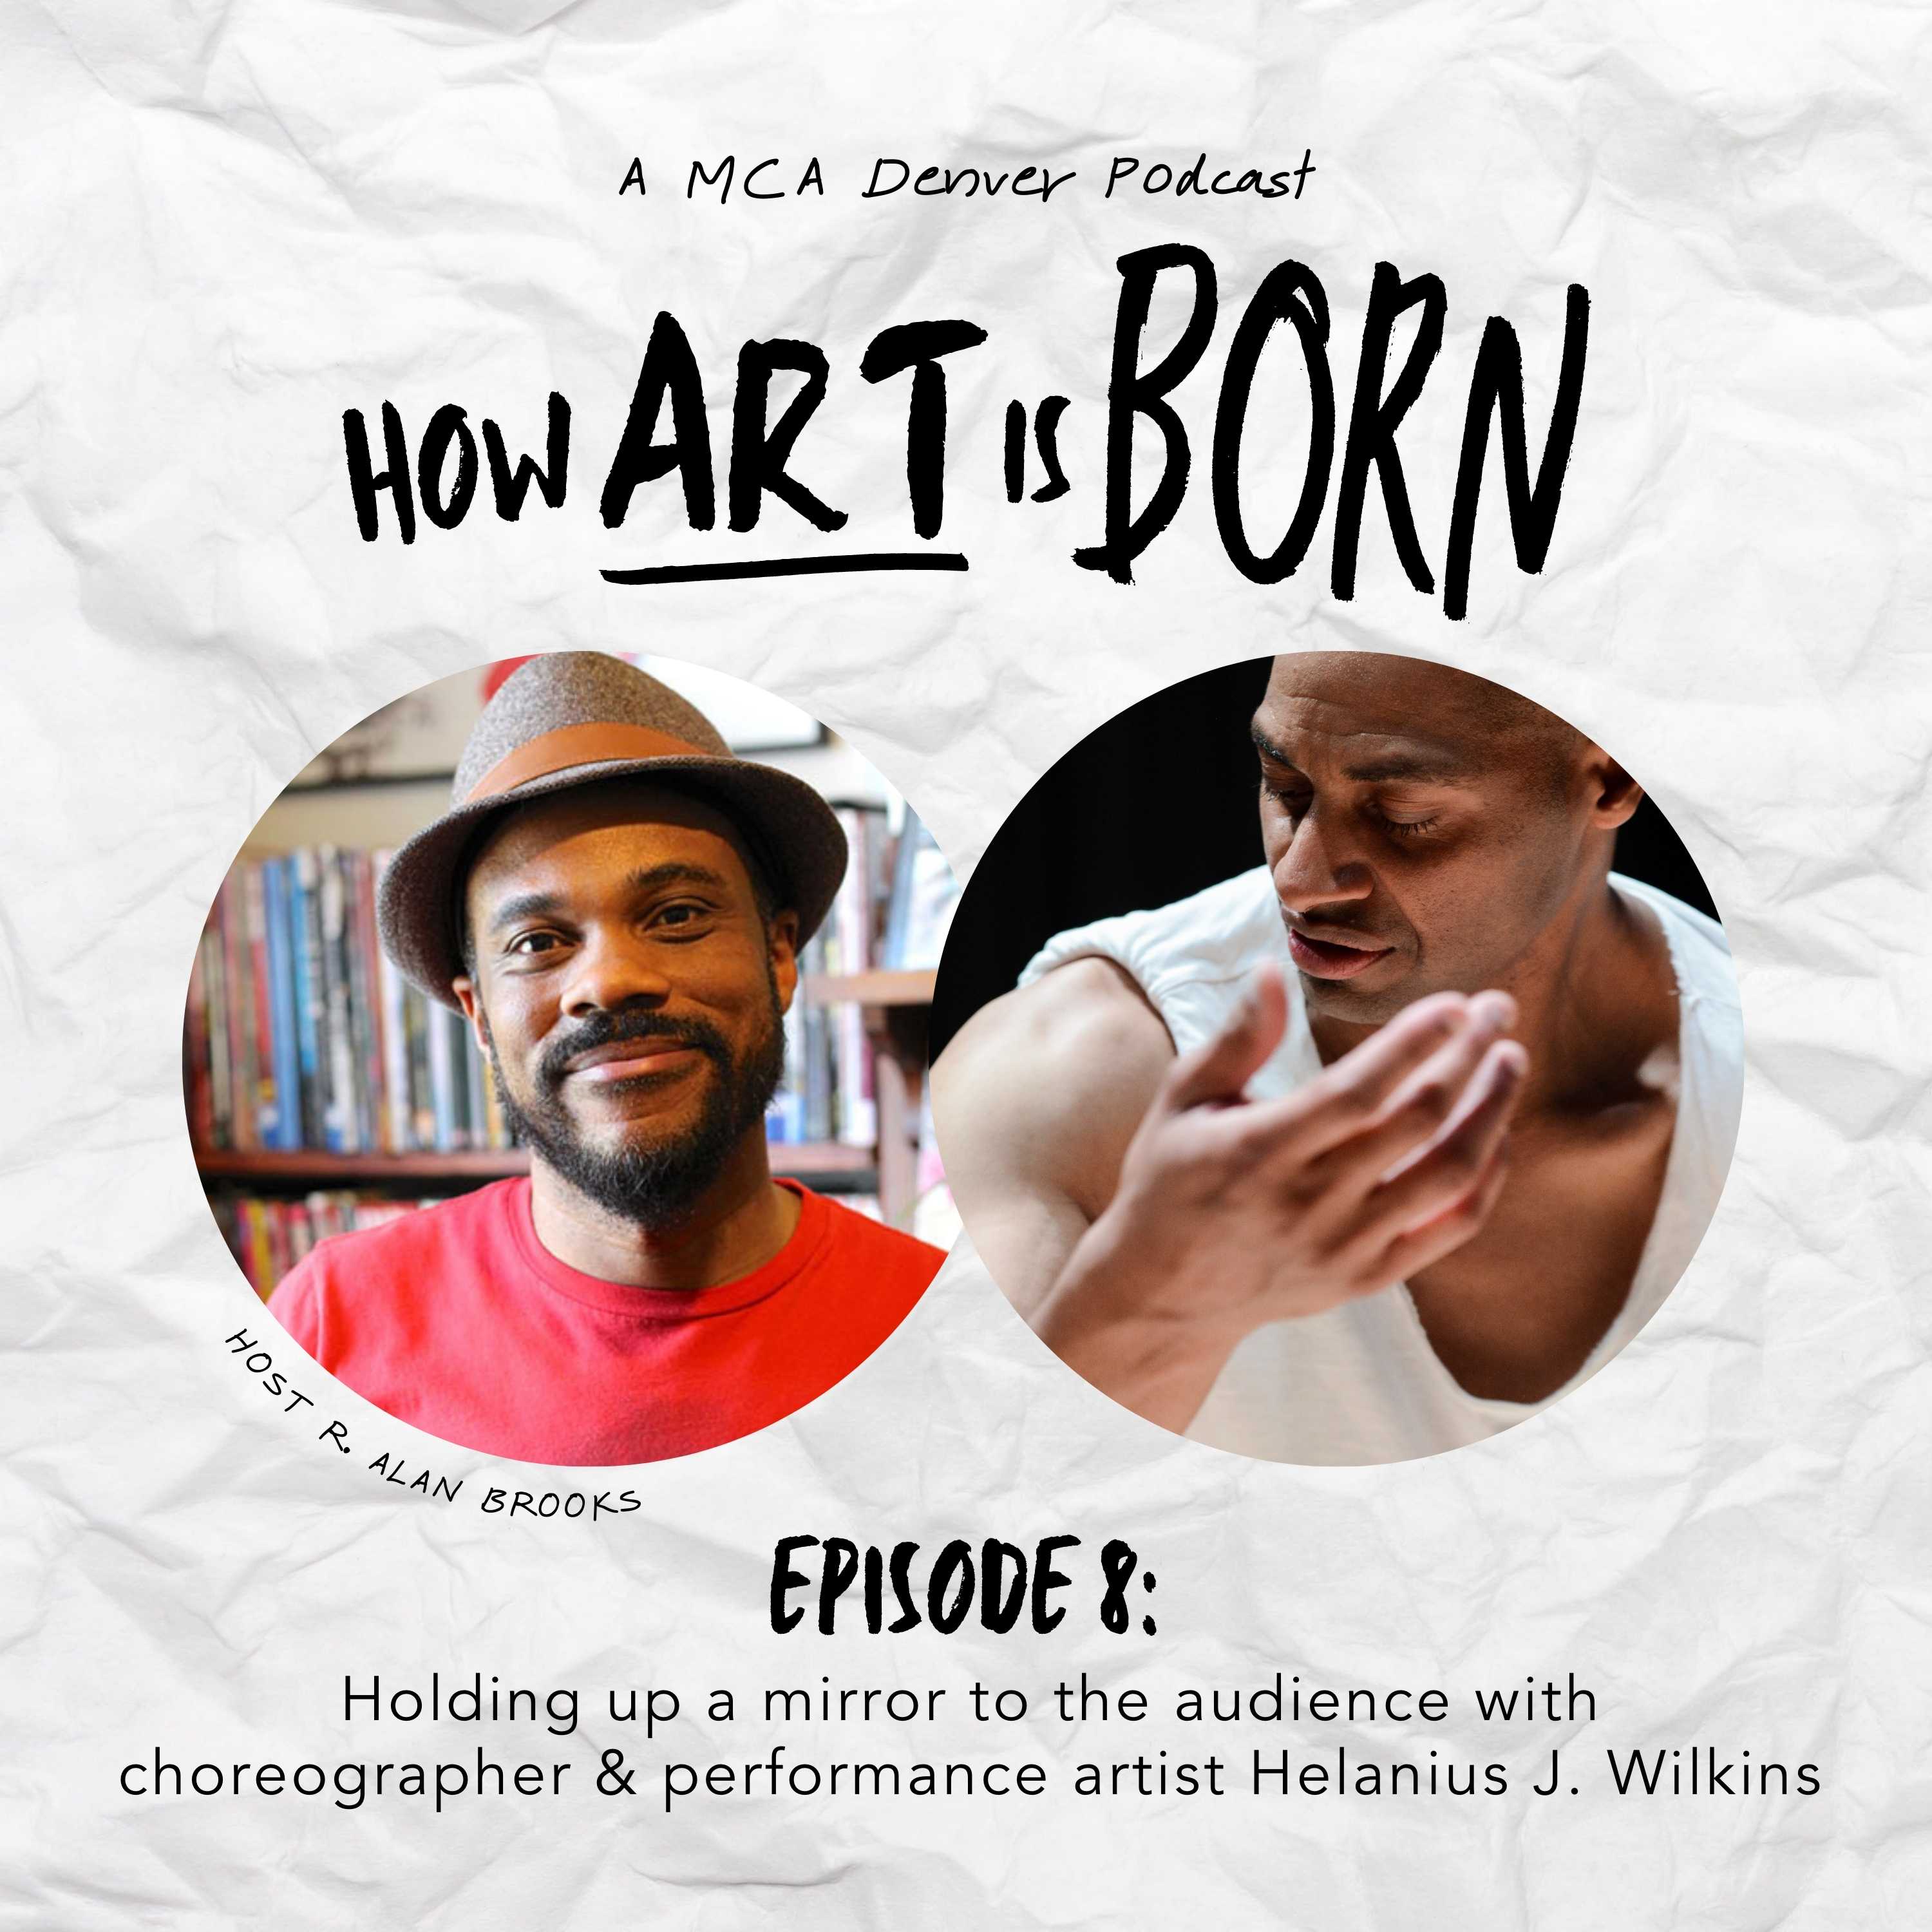 Artwork for podcast How Art is Born